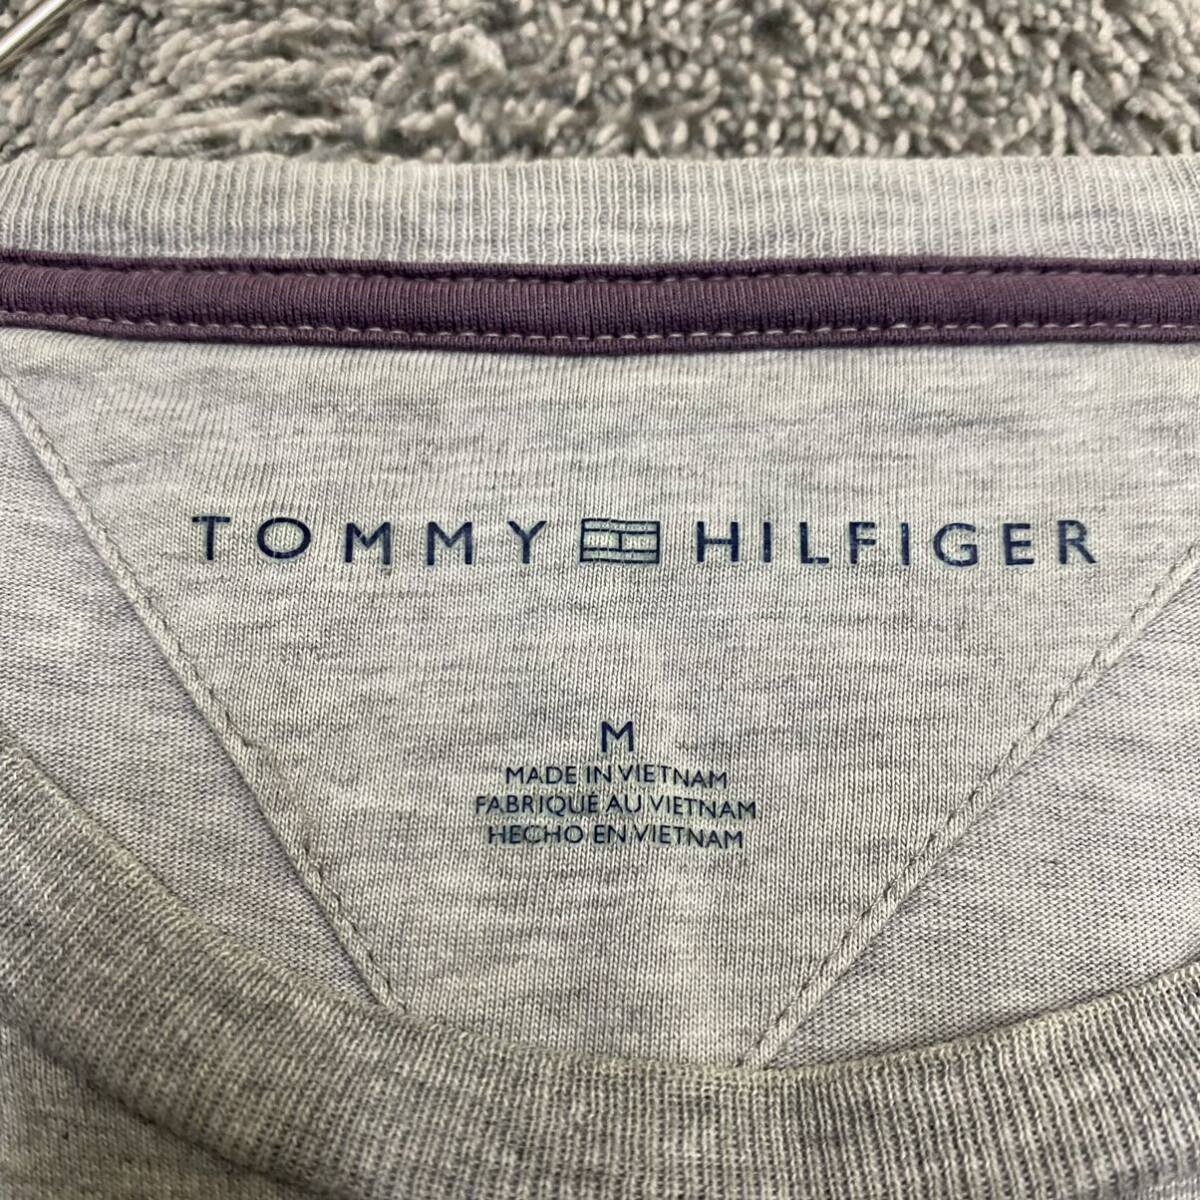 TOMMY HILFIGER トミーヒルフィガー 長袖Tシャツ 長袖カットソー ロンT サイズM グレー 灰色 メンズ トップス 最落なし （Y18_画像6